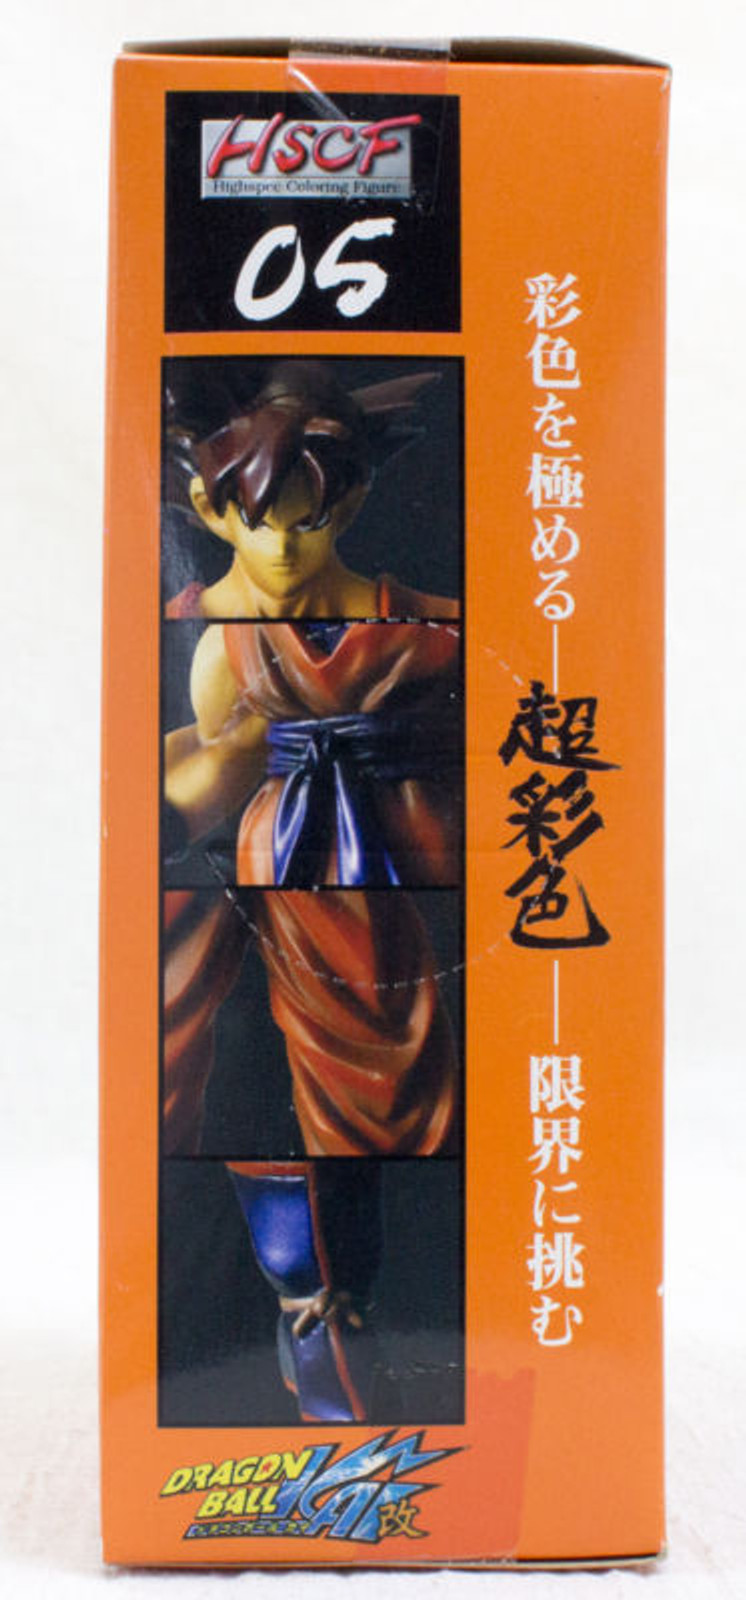 Dragon Ball HSCF Figure high spec coloring Son Gokou Goku 05 JAPAN ANIME